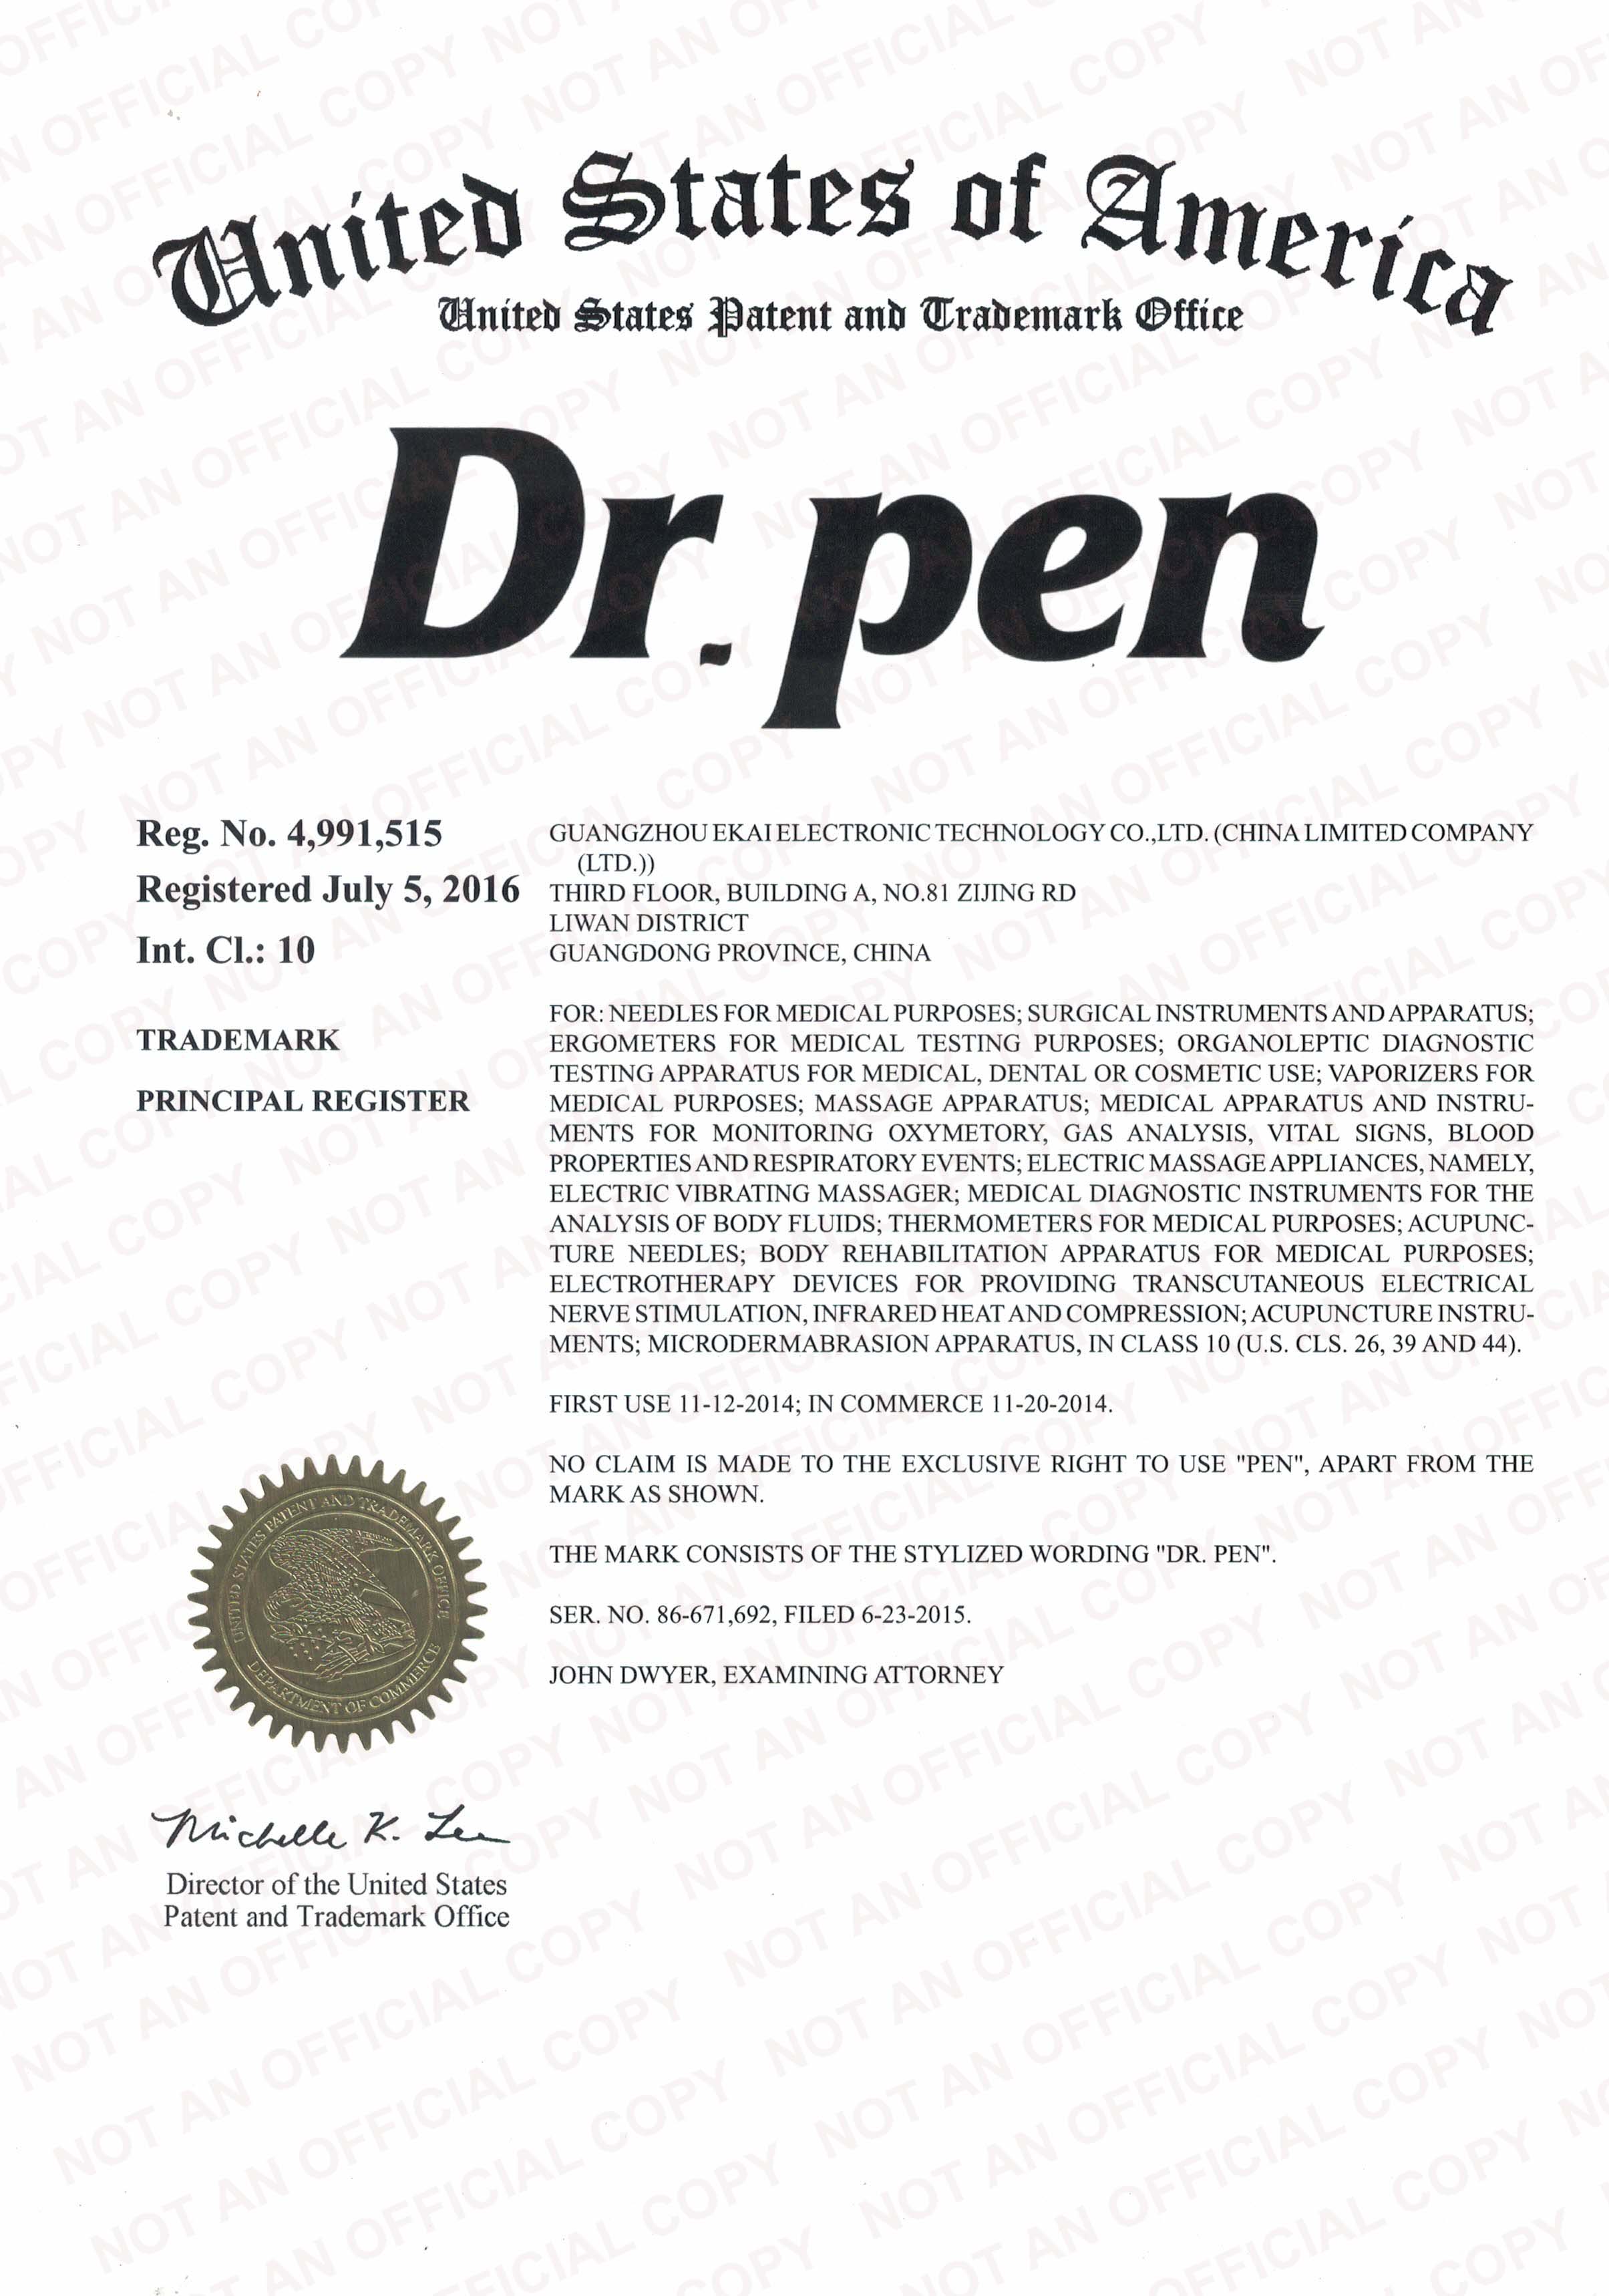 Dr. Pen M7 Microneedling Dermapen - 12pins х2 + 36pins х2 + RN x2 Cartridges